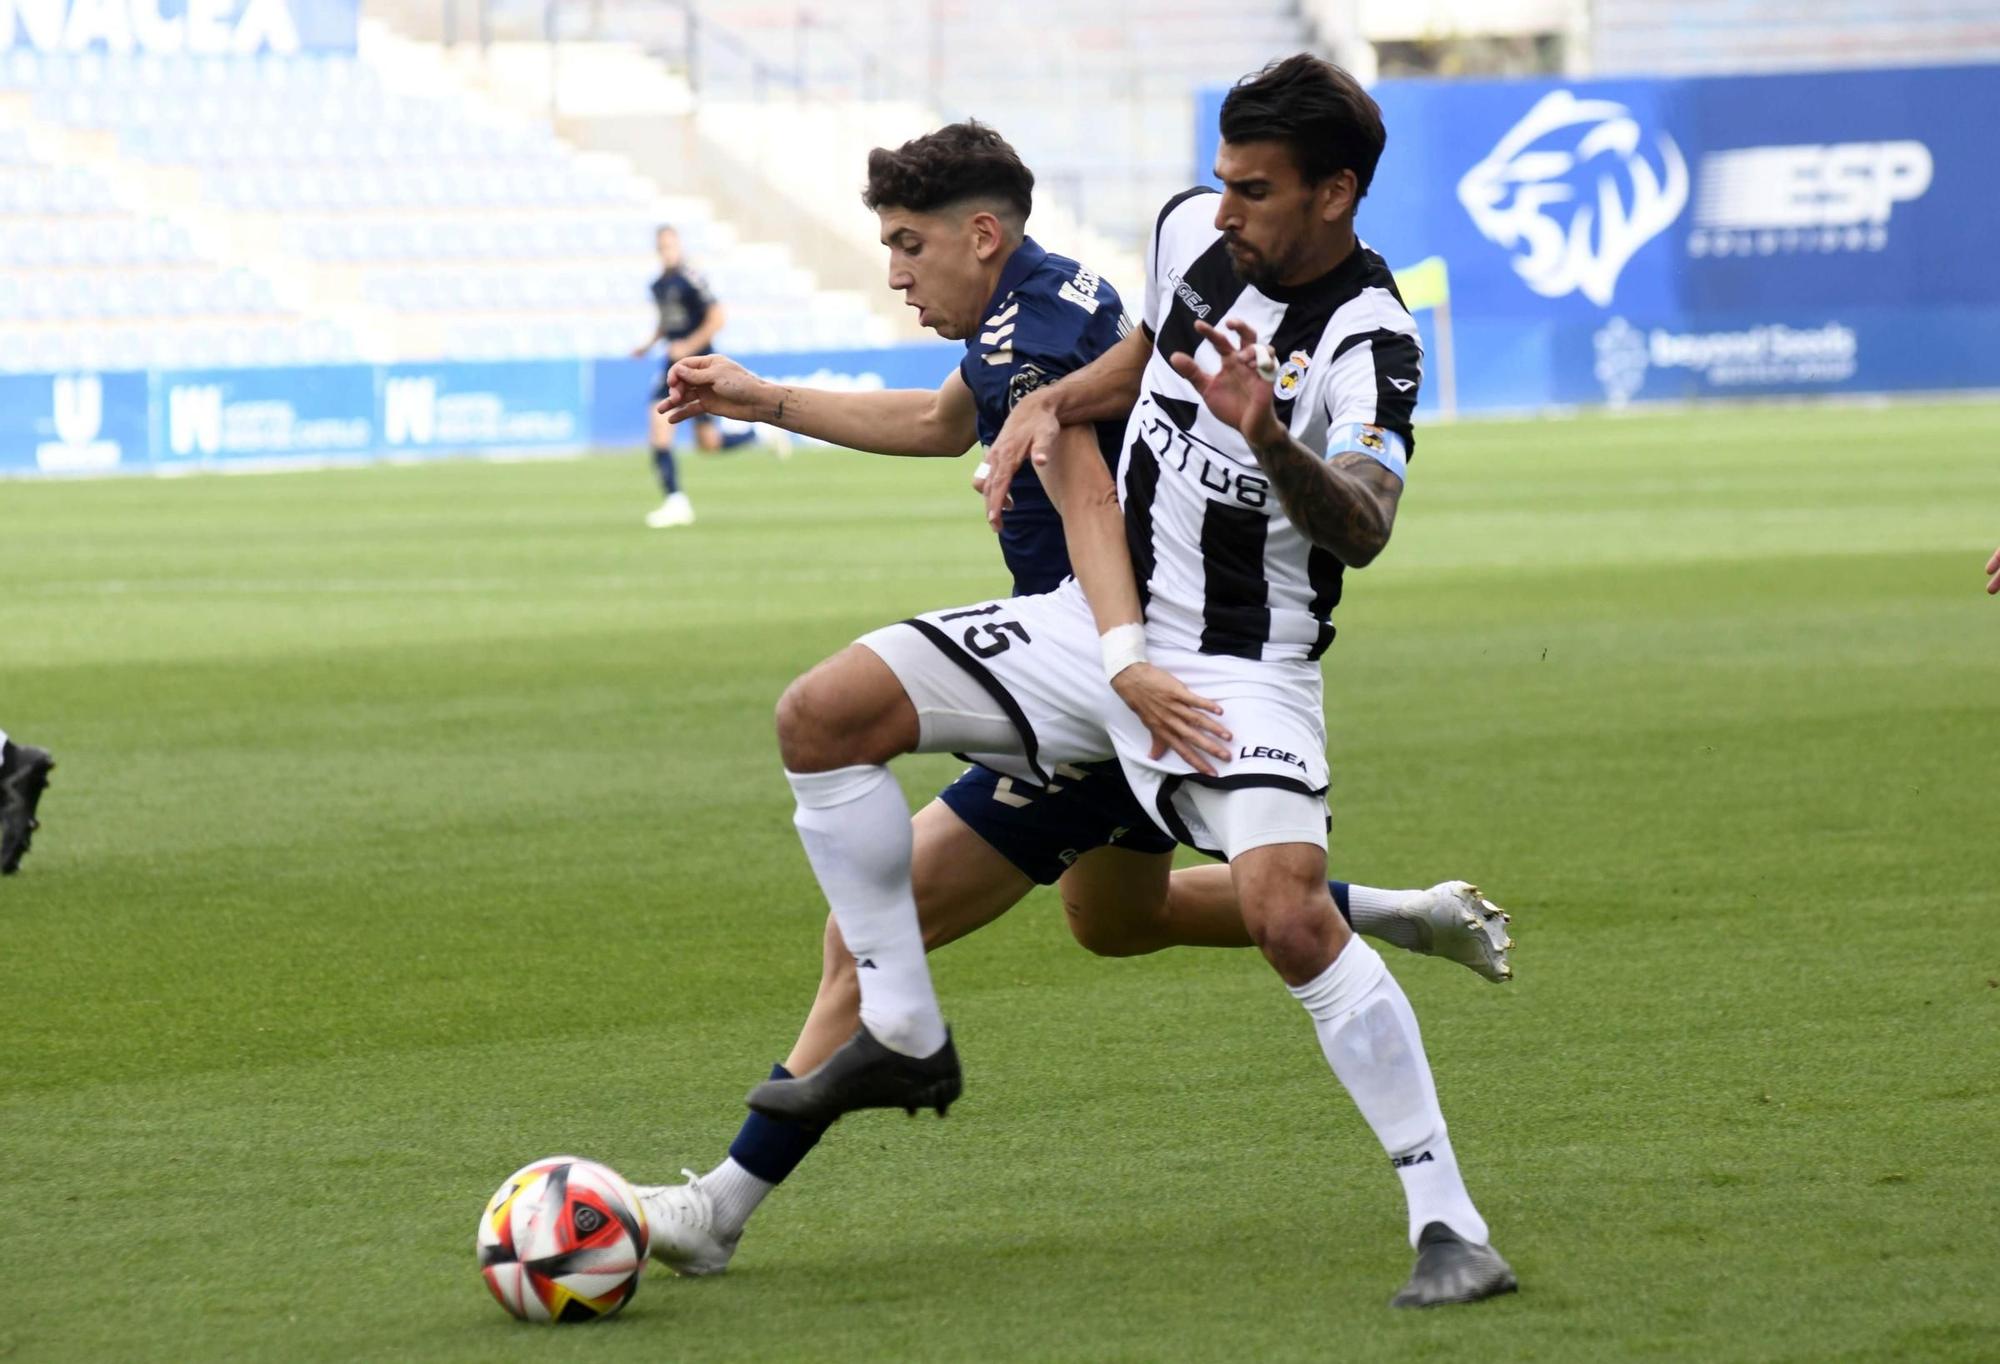 UCAM Murcia - RB Lienense